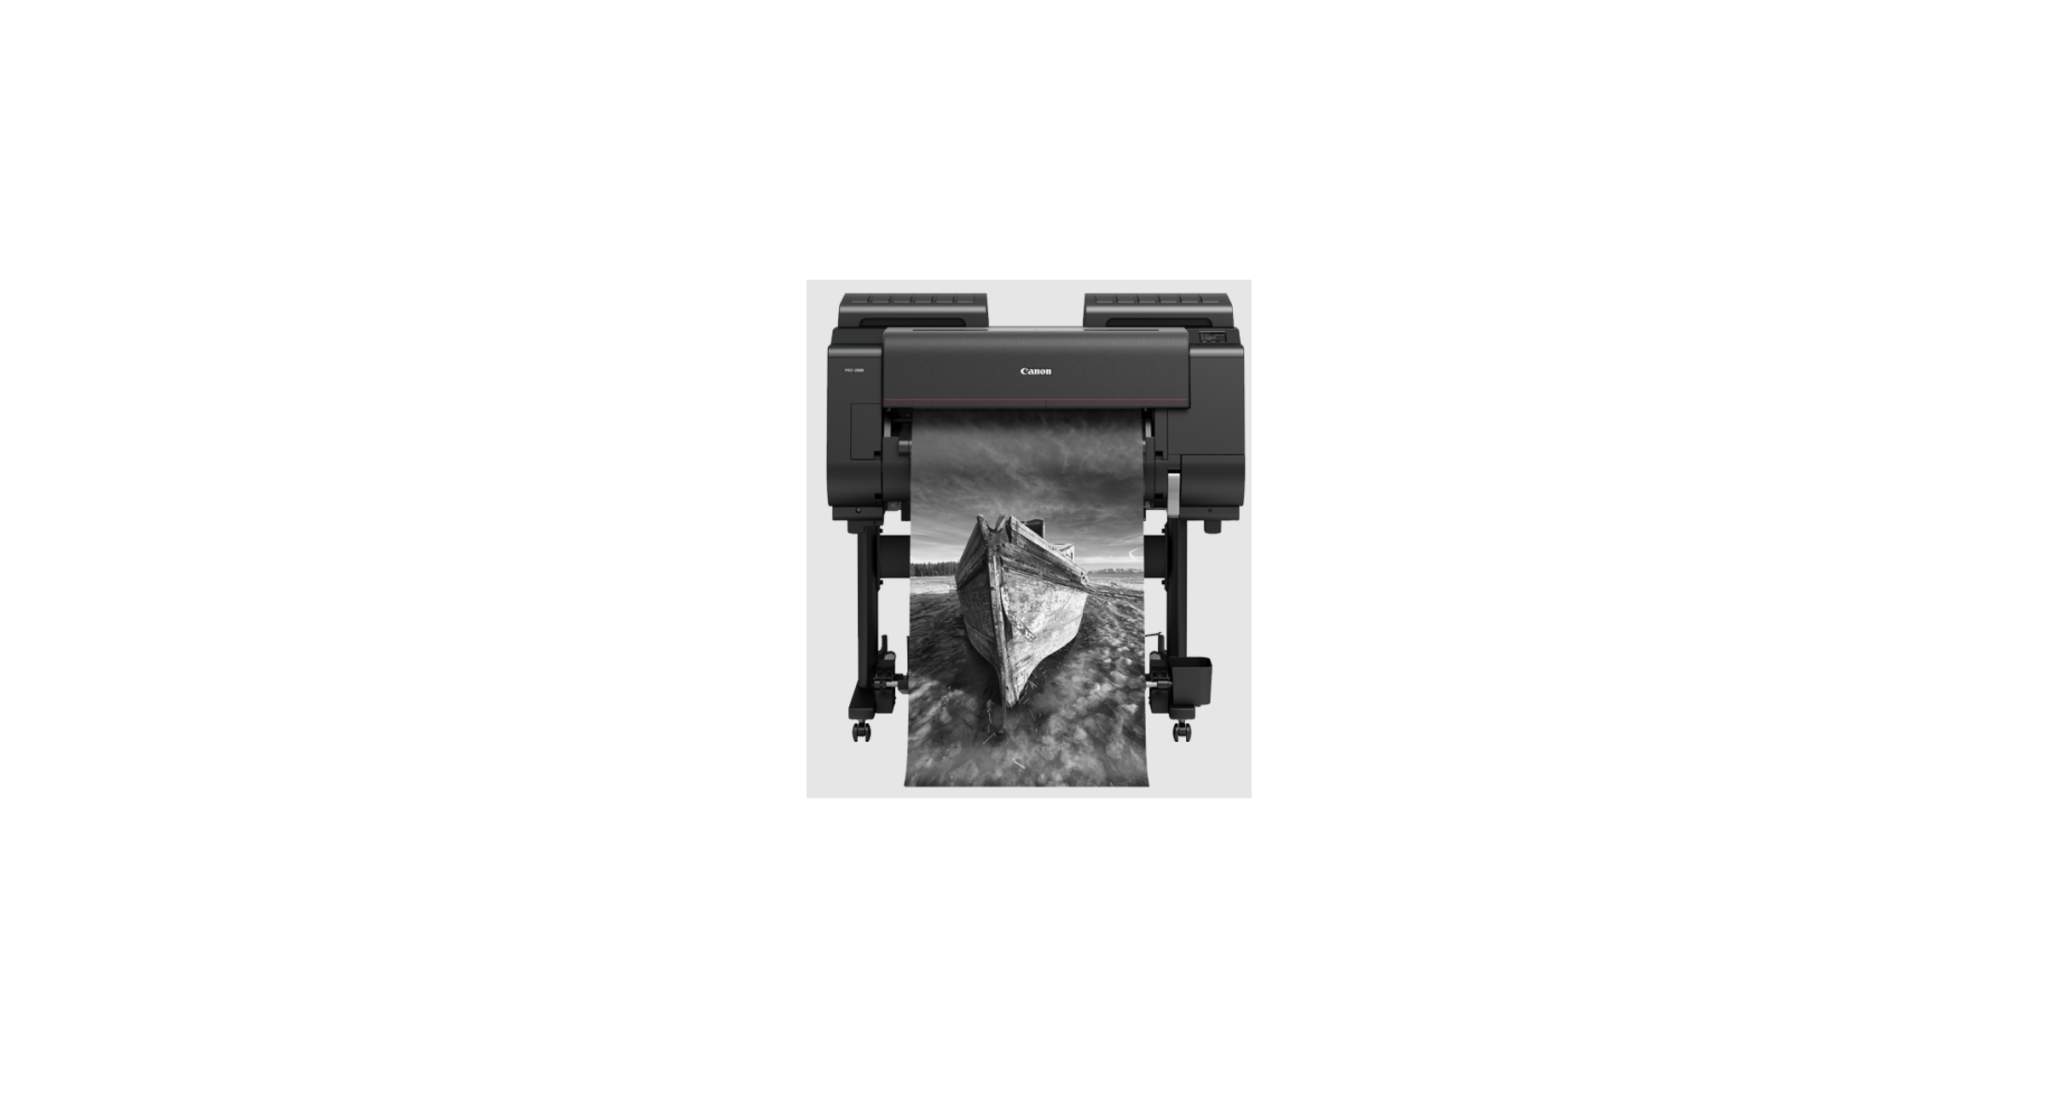 PRO-2000 imagePROGRAF Business Printers